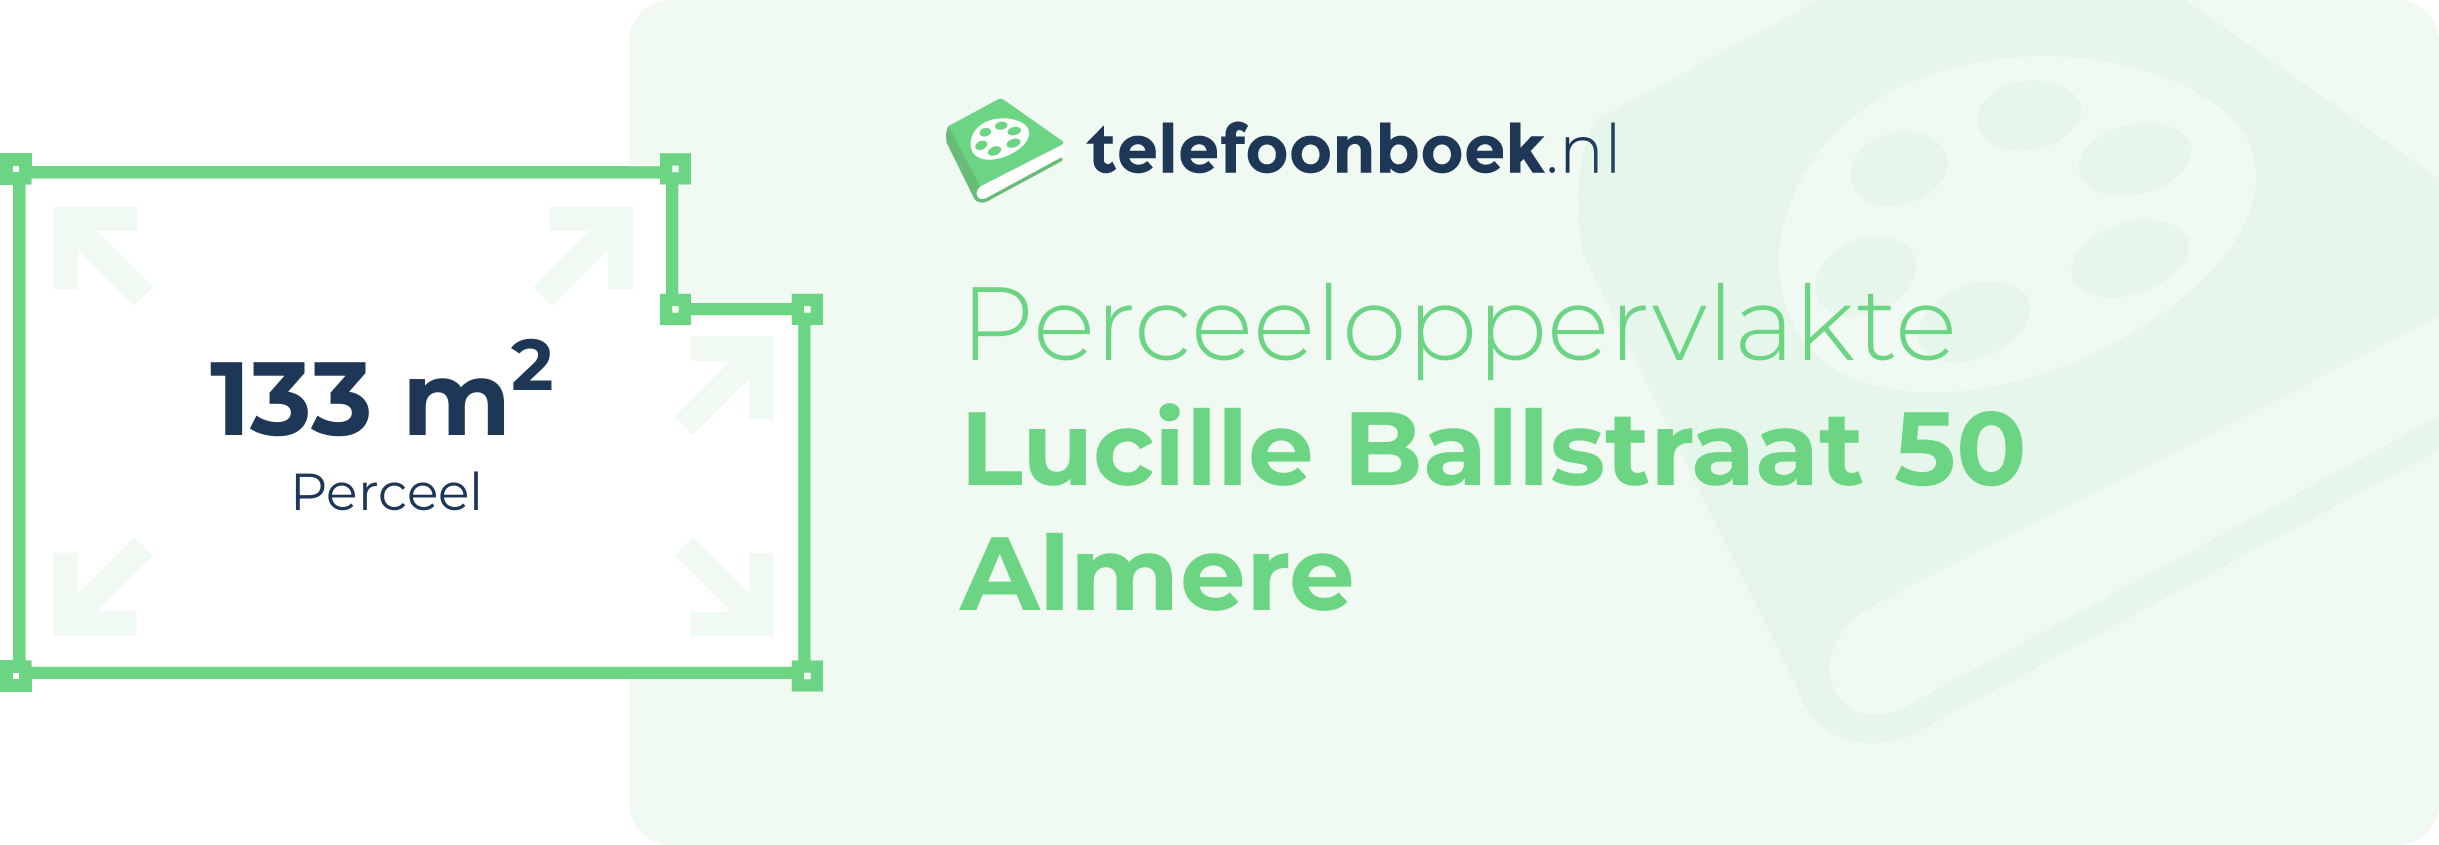 Perceeloppervlakte Lucille Ballstraat 50 Almere